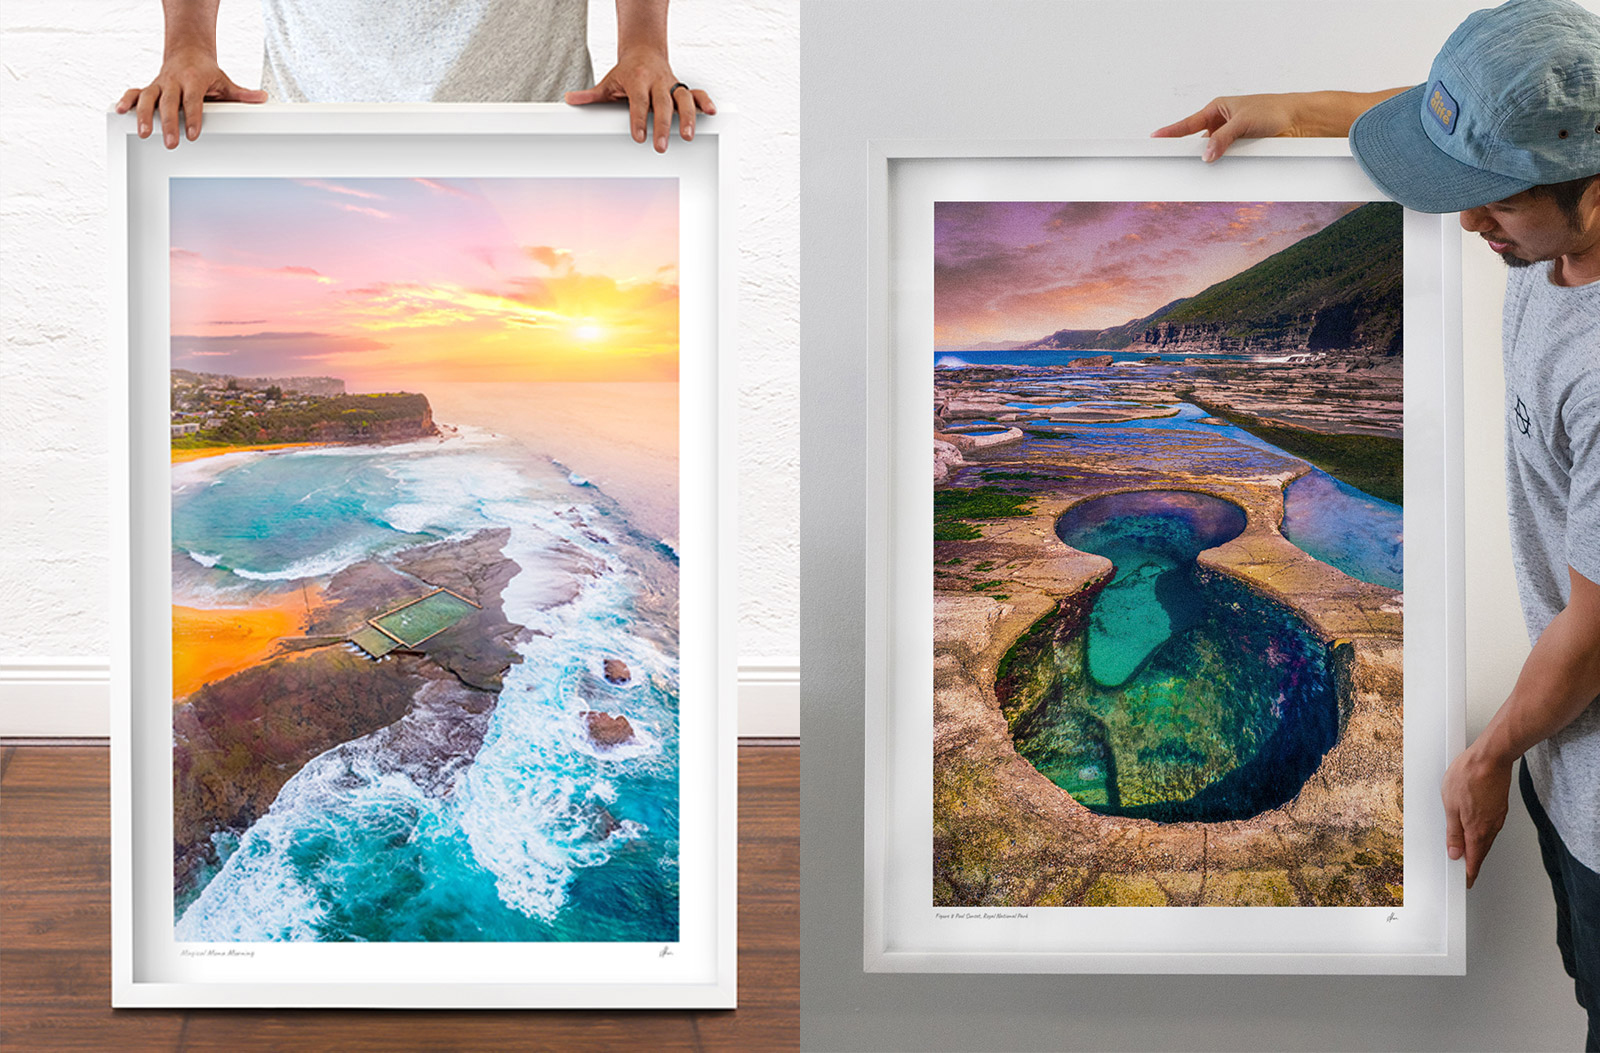 Allan Chan, travel, coastal, landscape photographer holding framed wall art prints.